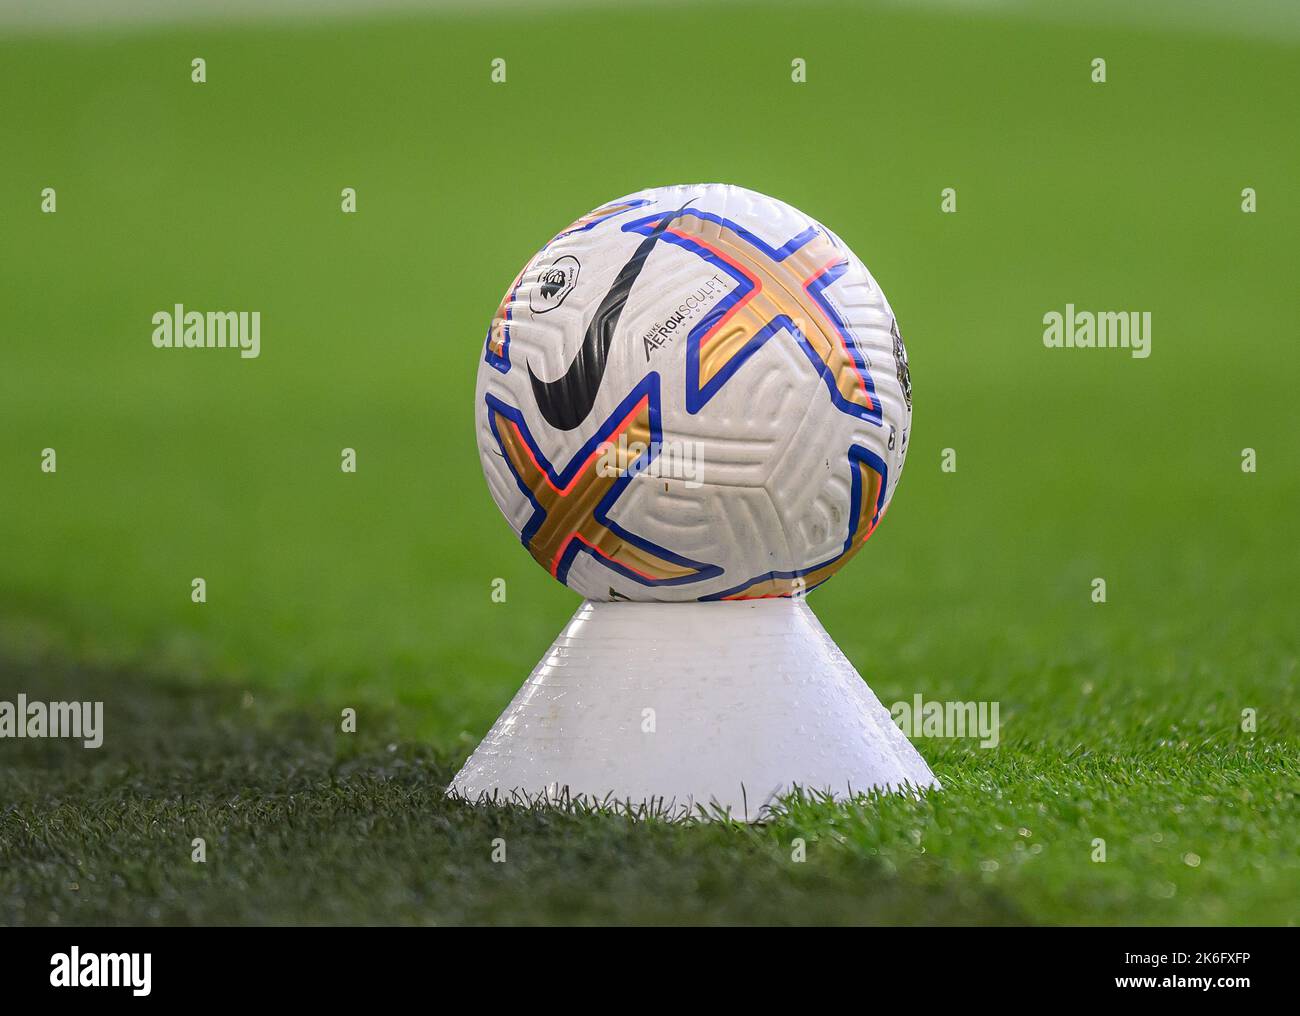 Premier league football nike e imágenes alta - Alamy